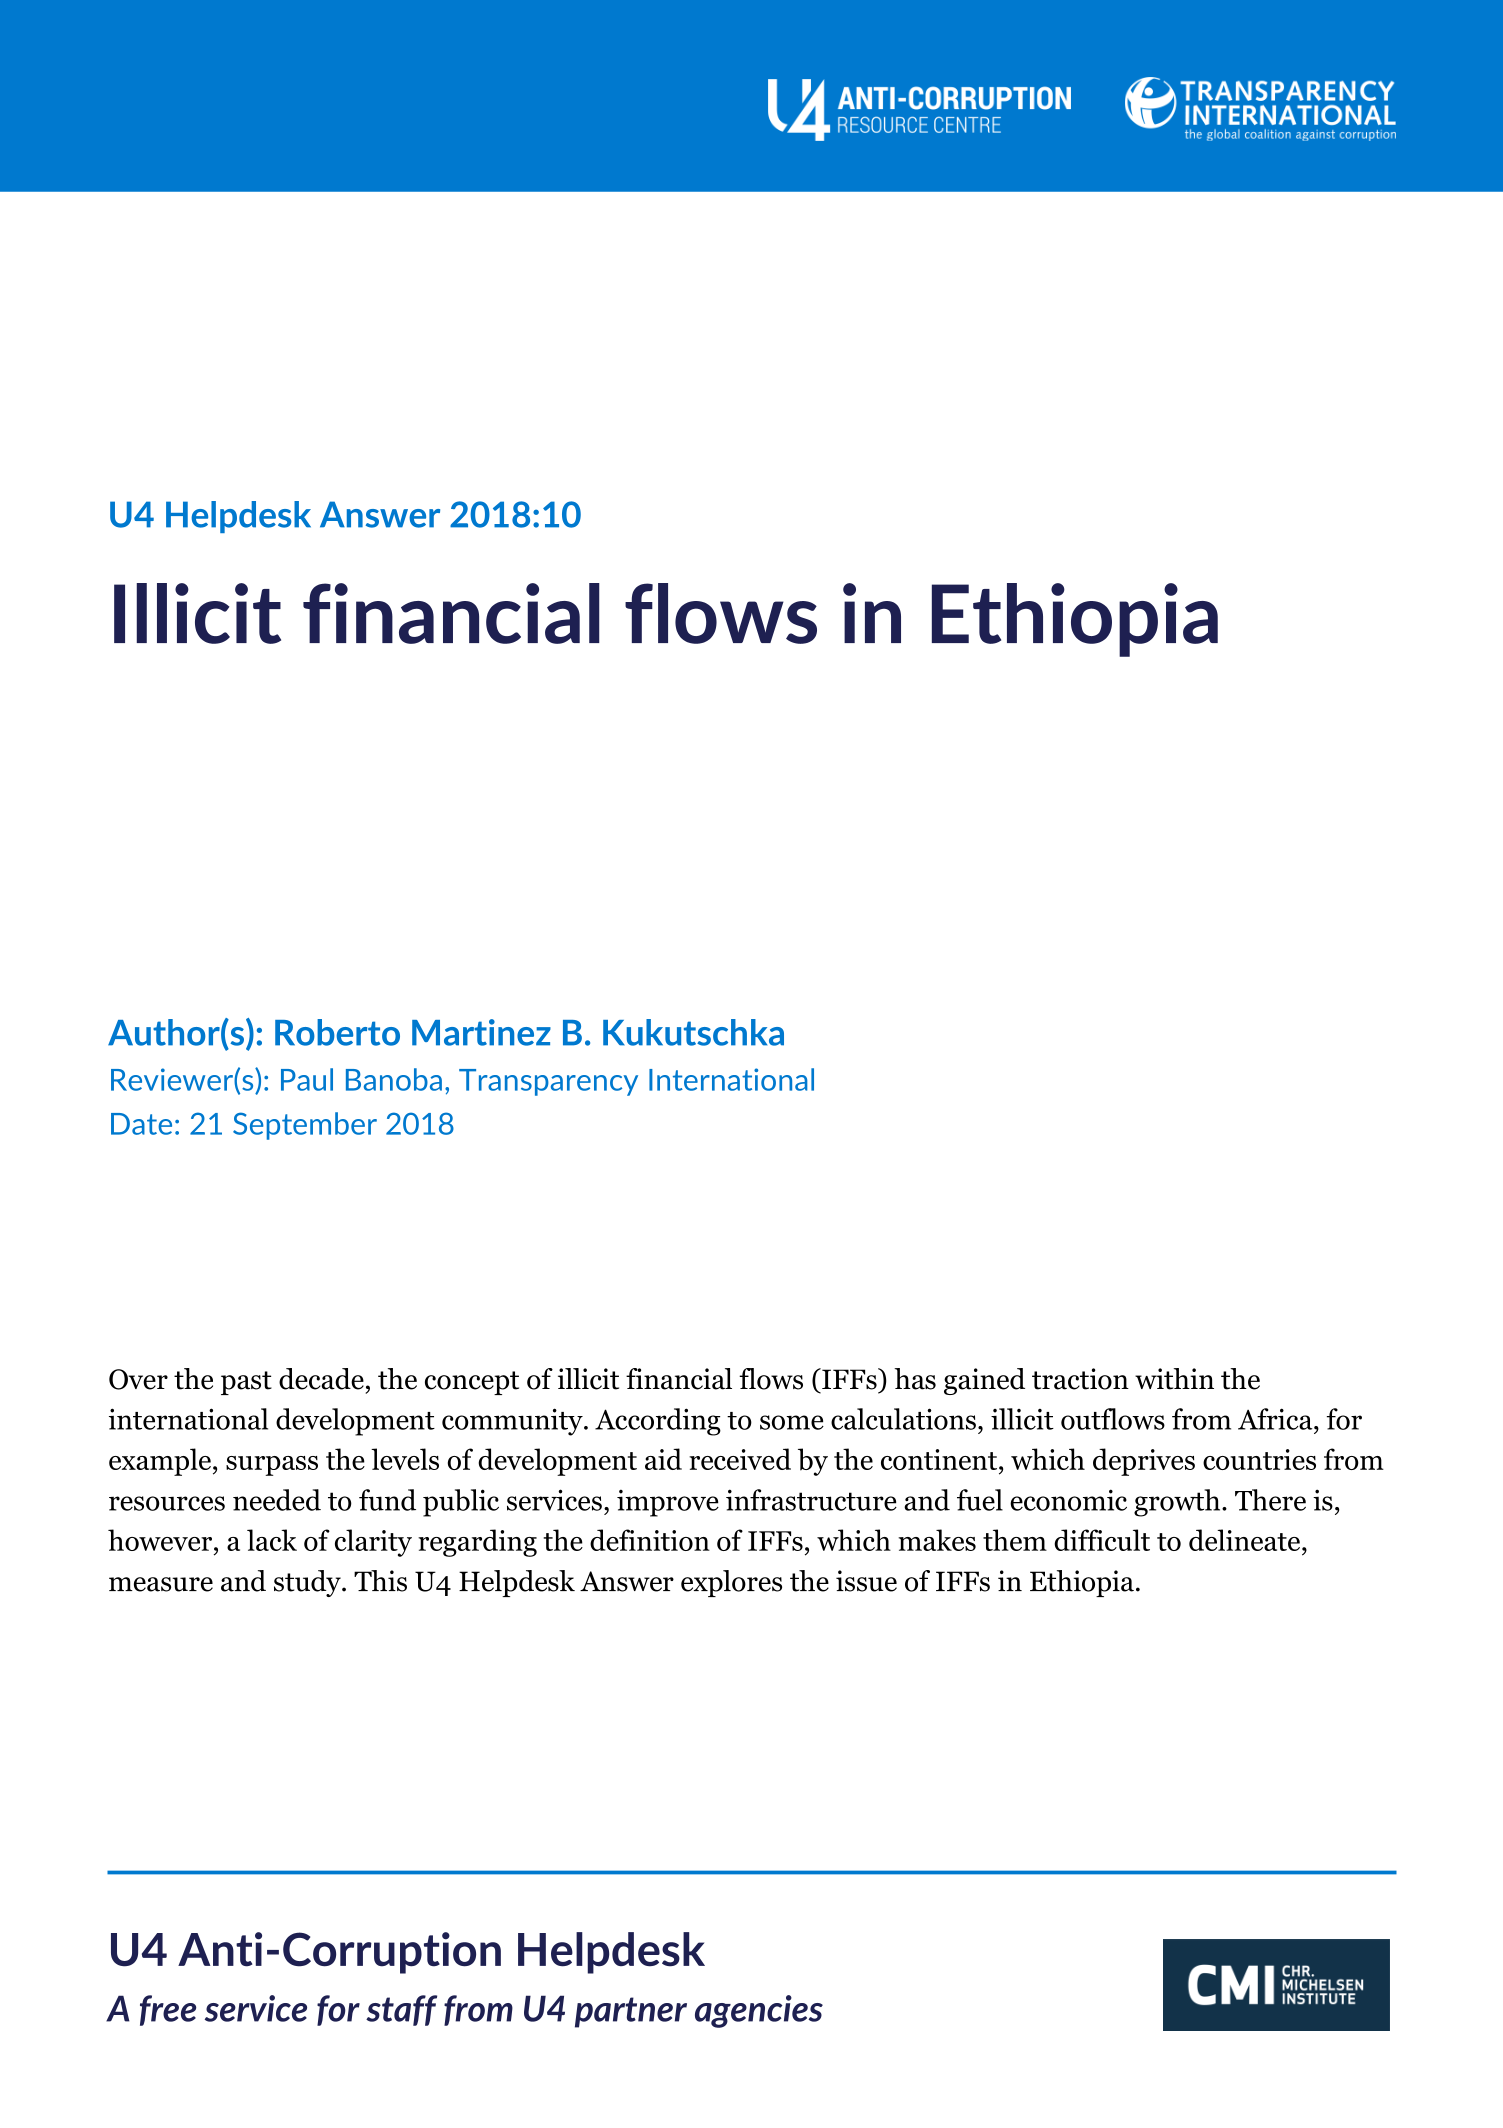 Illicit financial flows in Ethiopia